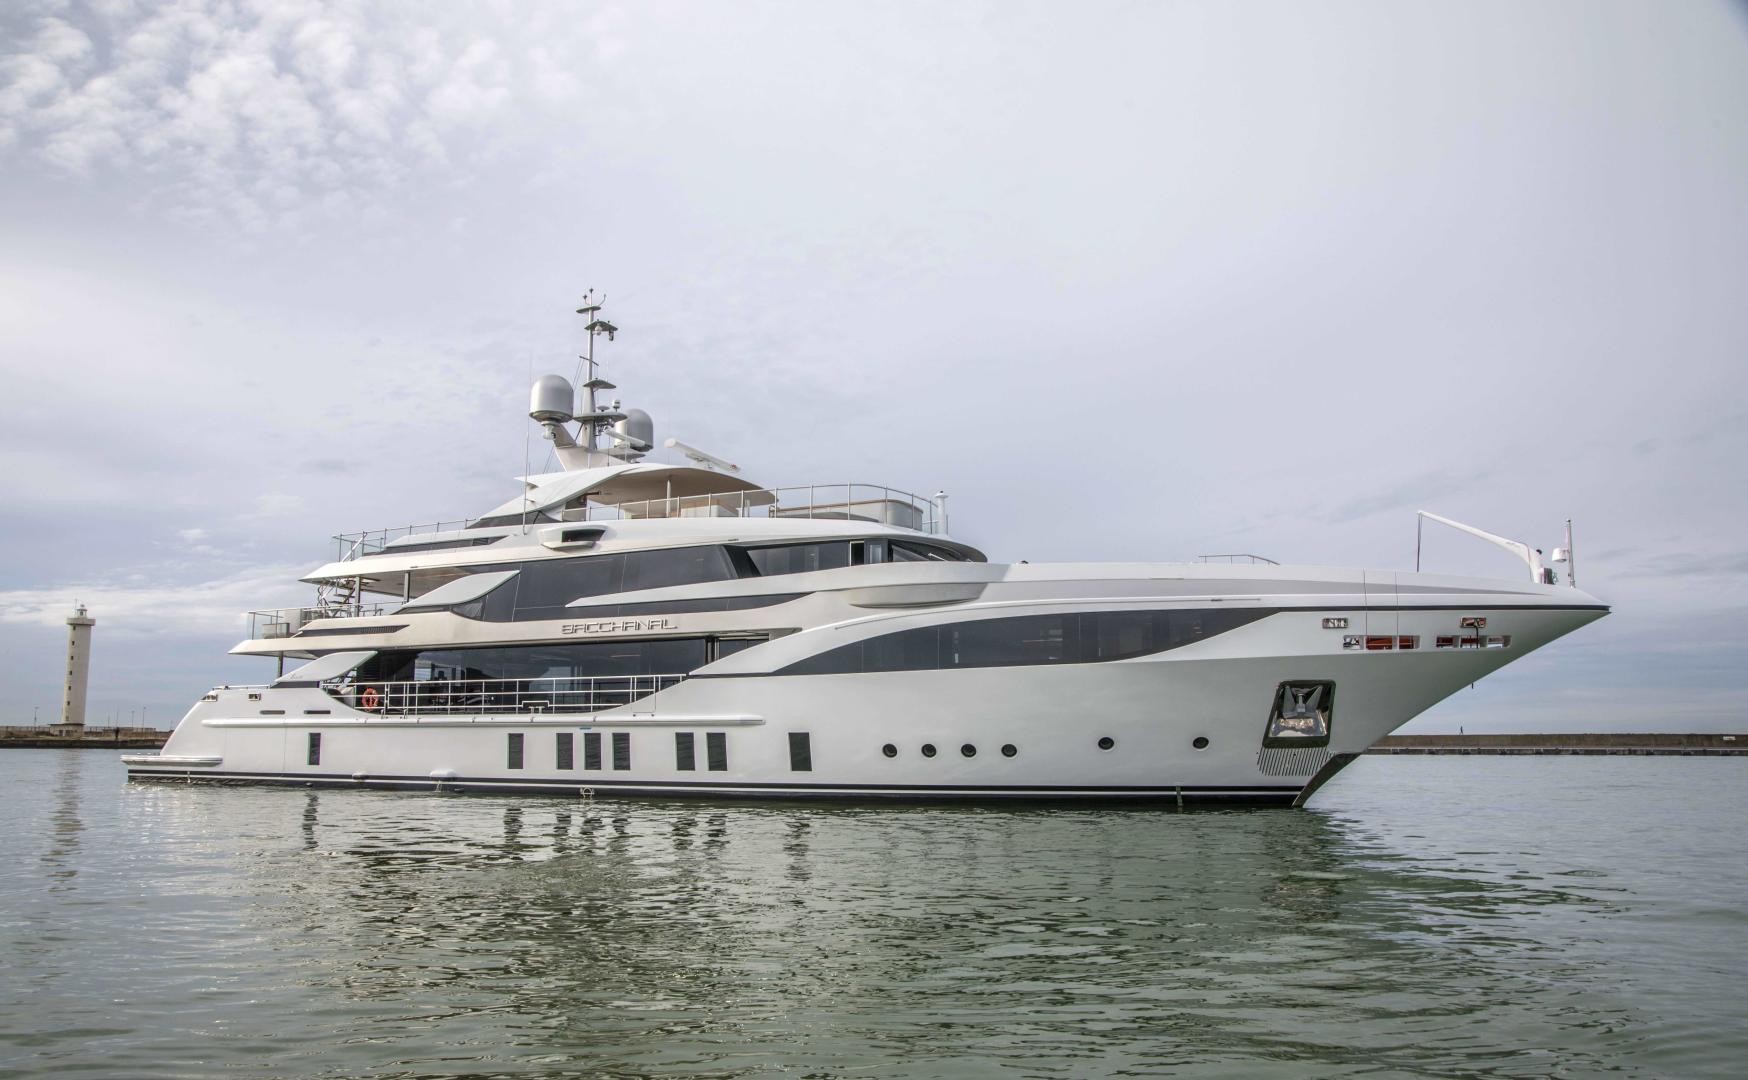 Benetti consegna FB703 M/Y “Bacchanal” mega yacht custom di 47 metri